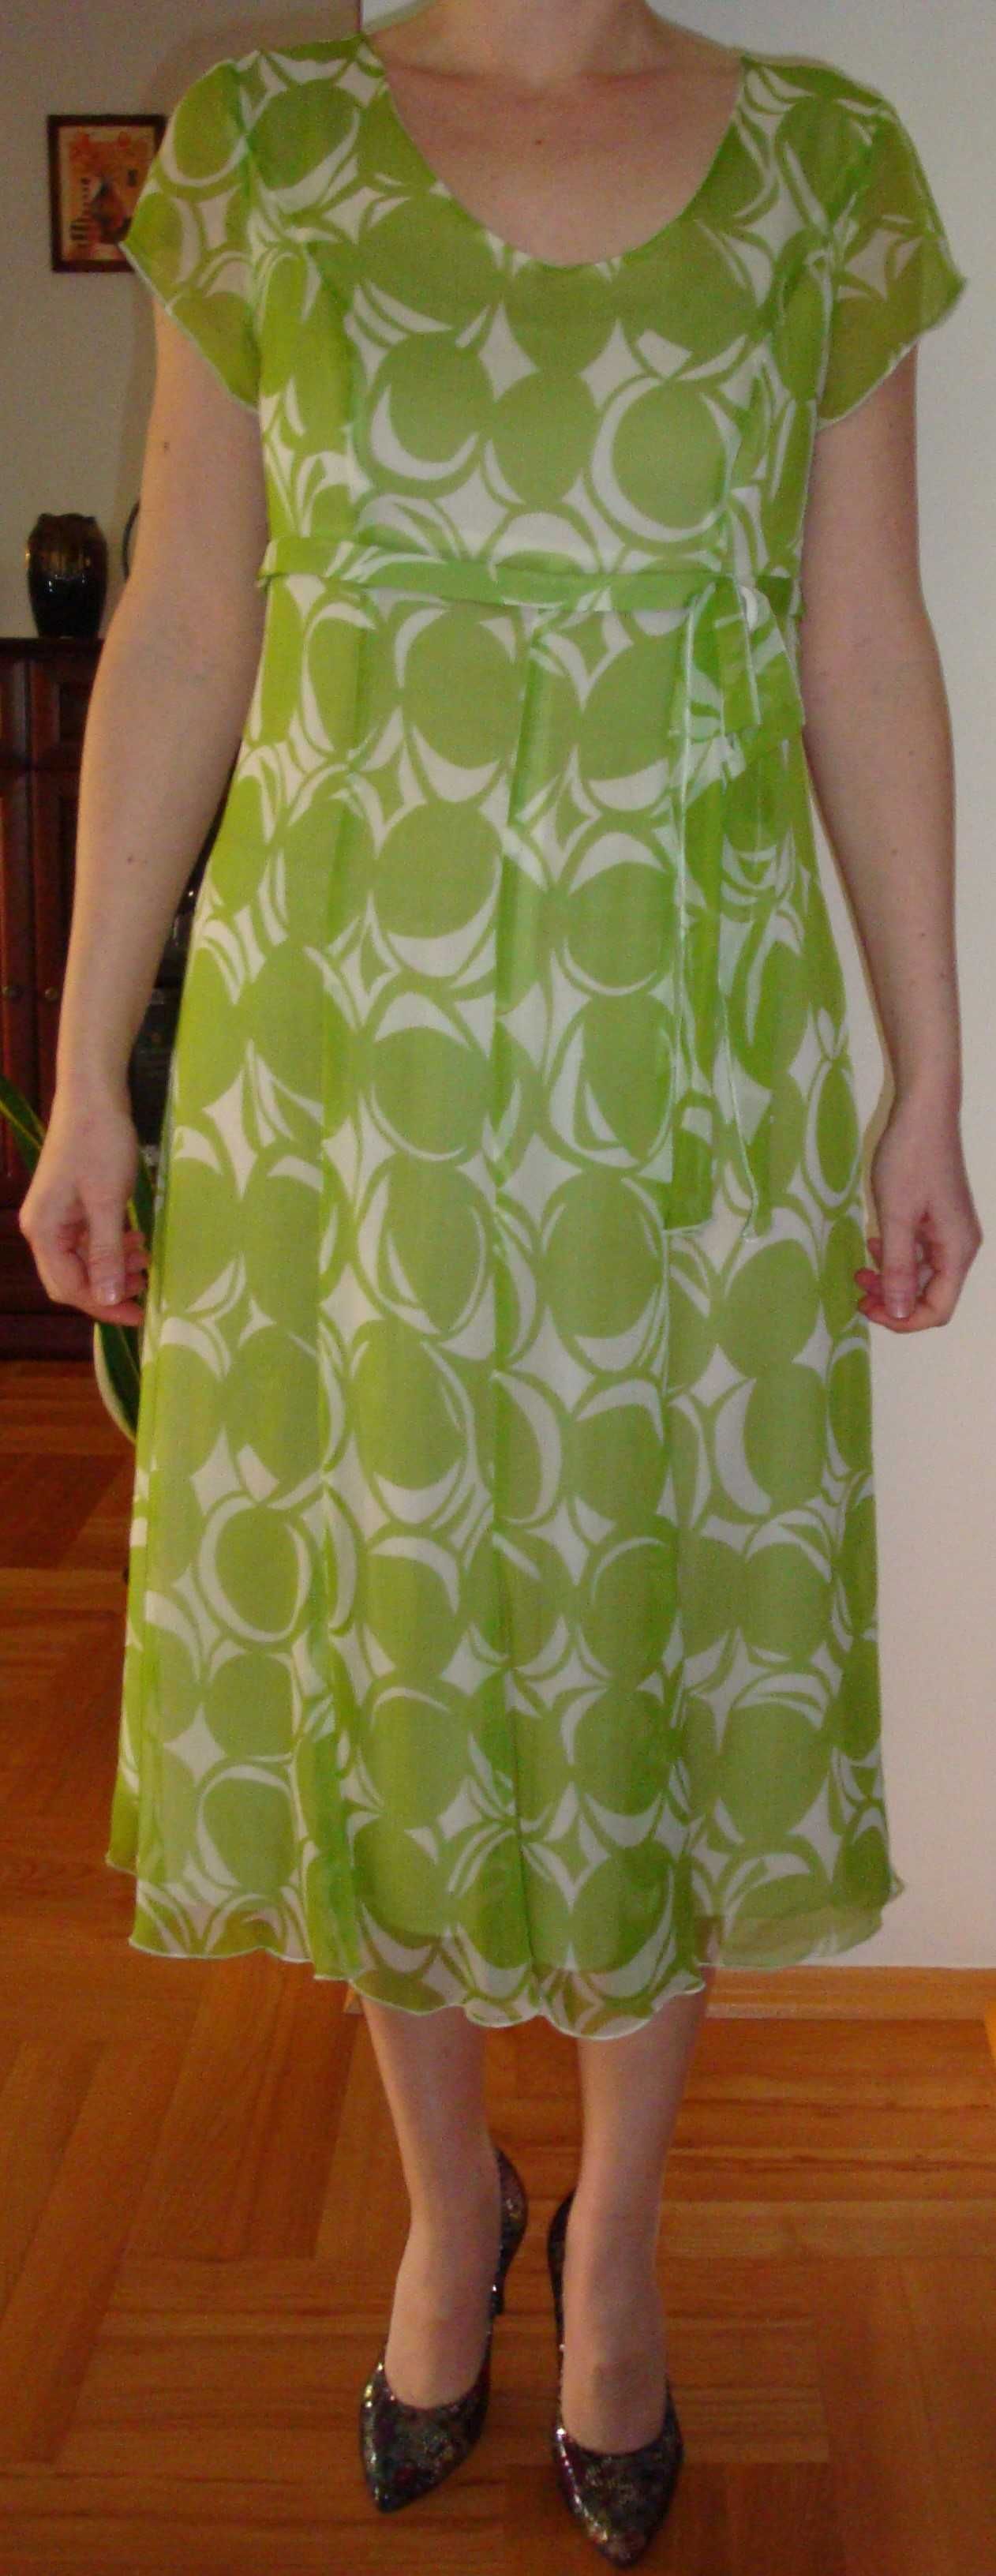 sukienka na lato/ zielona sukienka